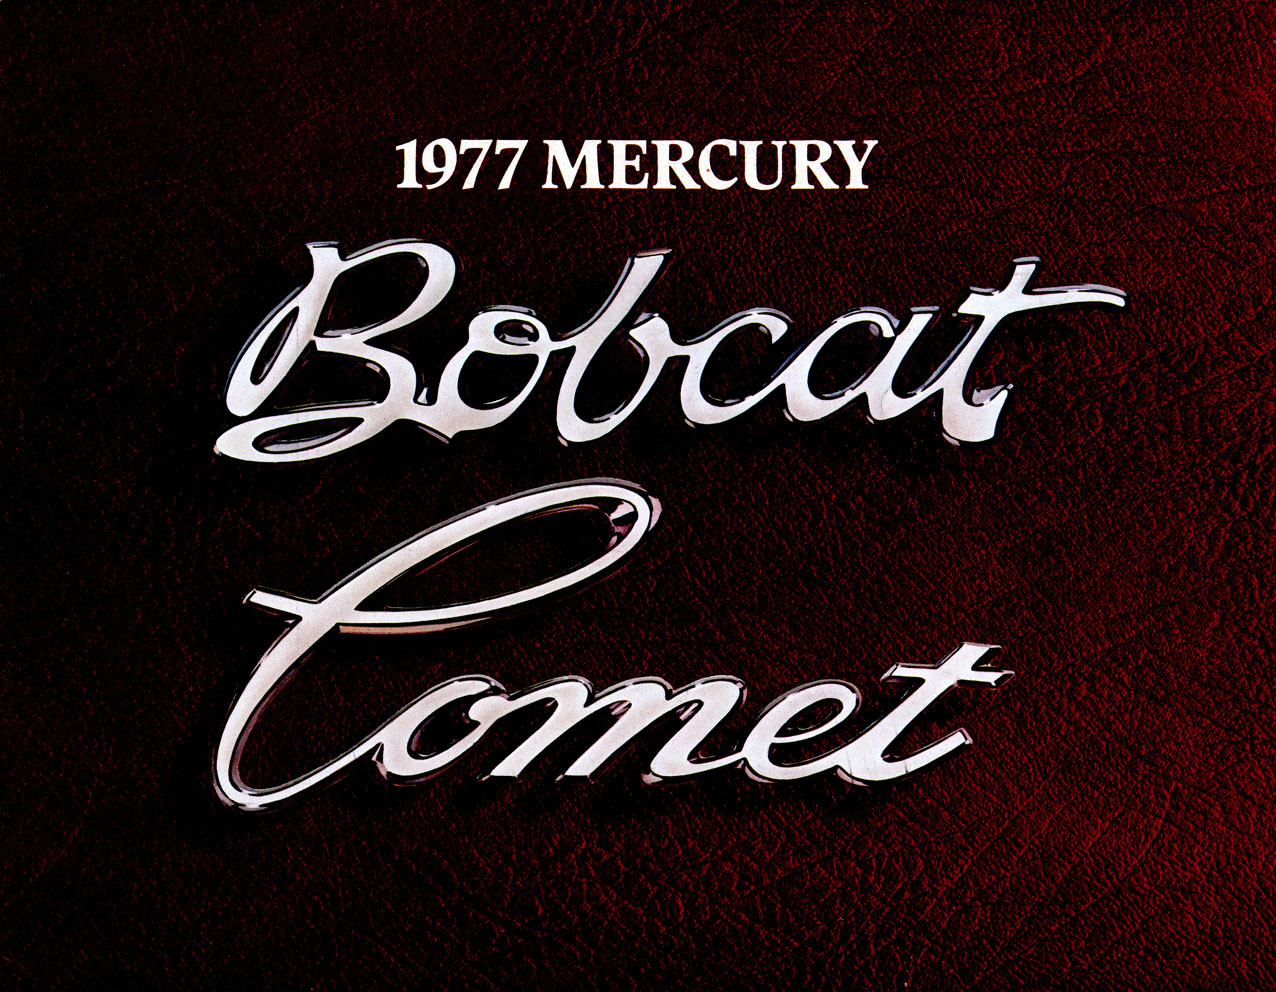 1977 Mercury Bobcat and Comet